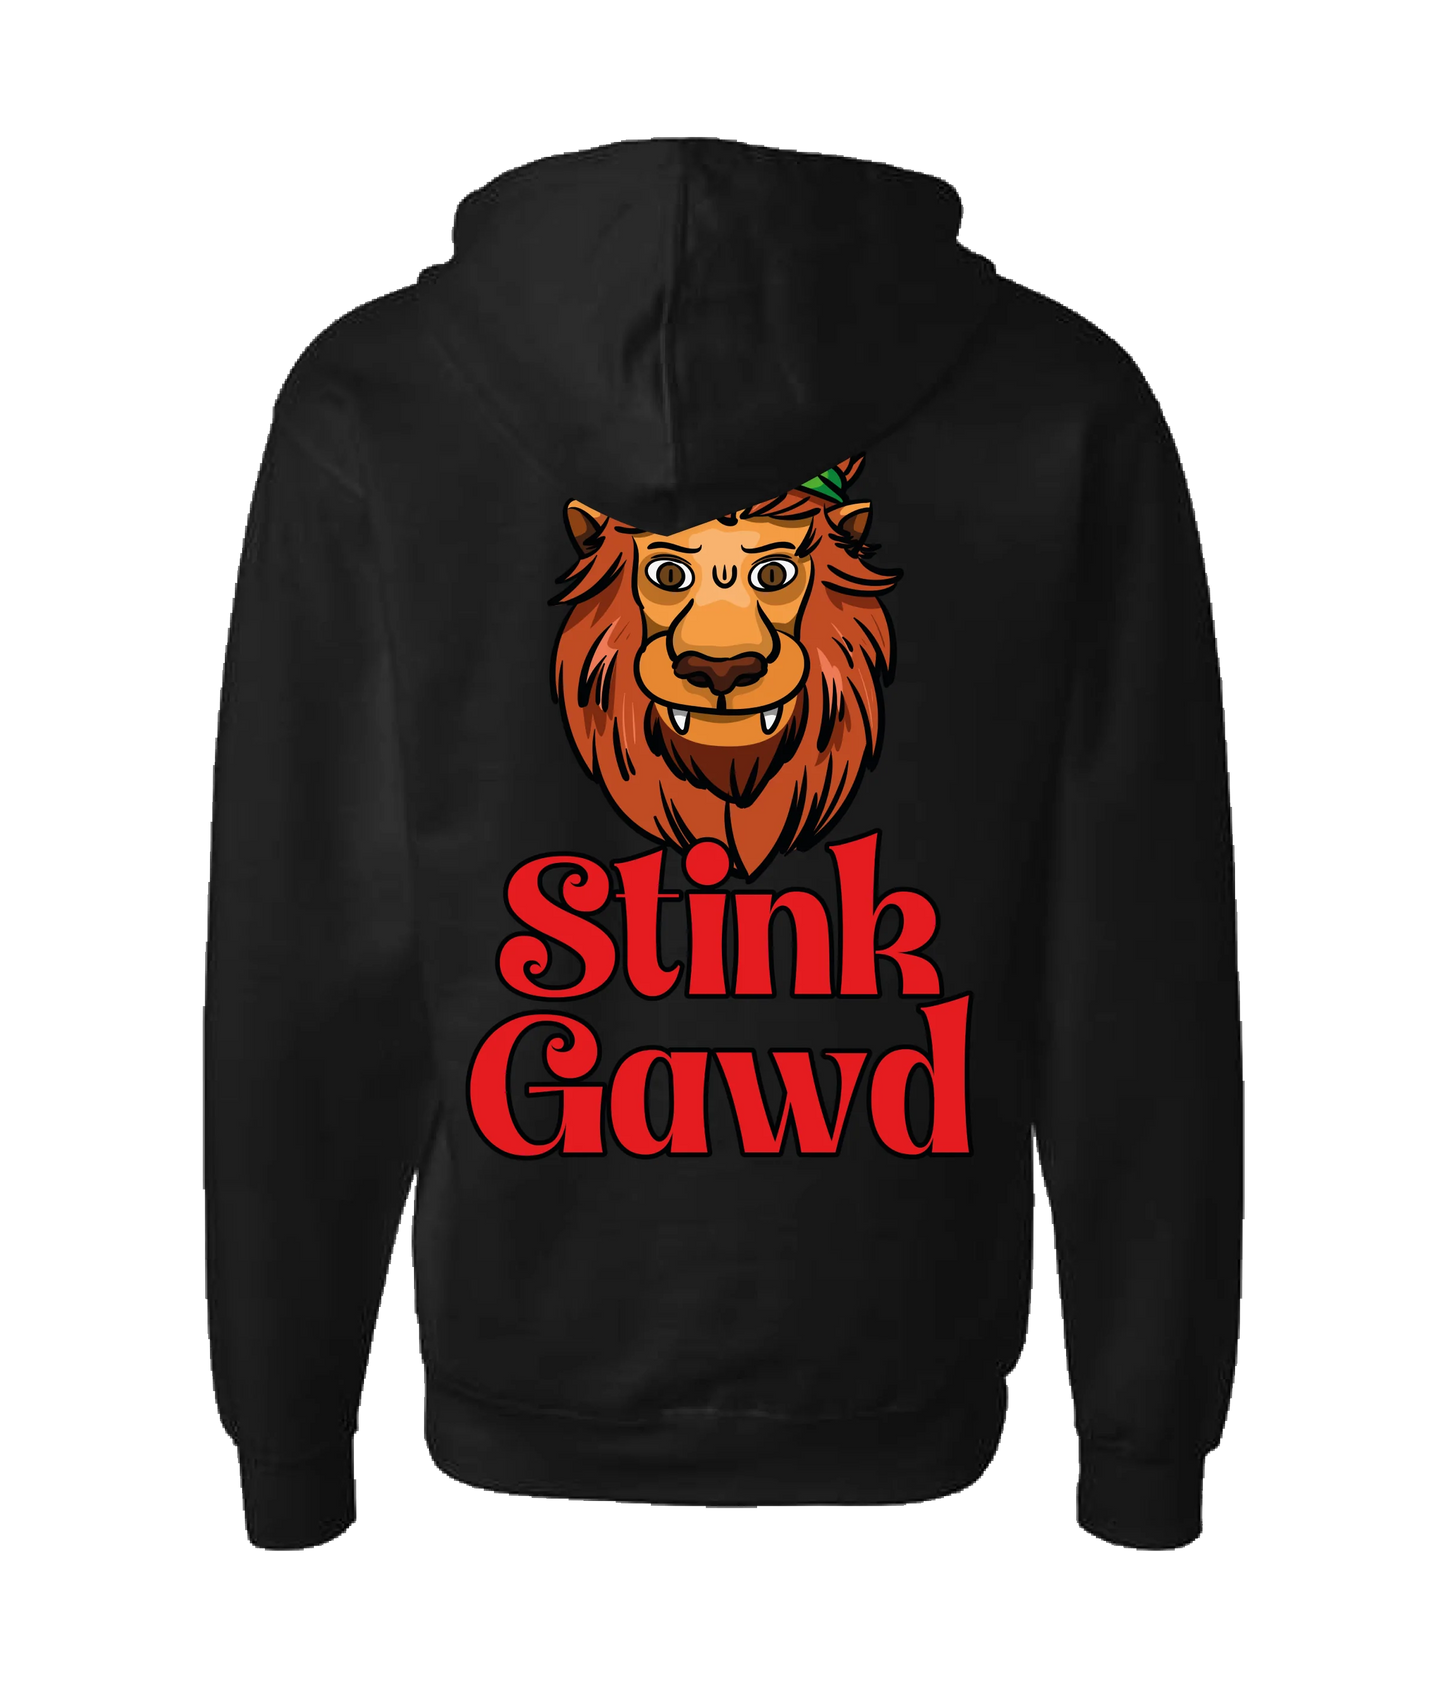 StinkGawd - Lion - Black Zip Up Hoodie